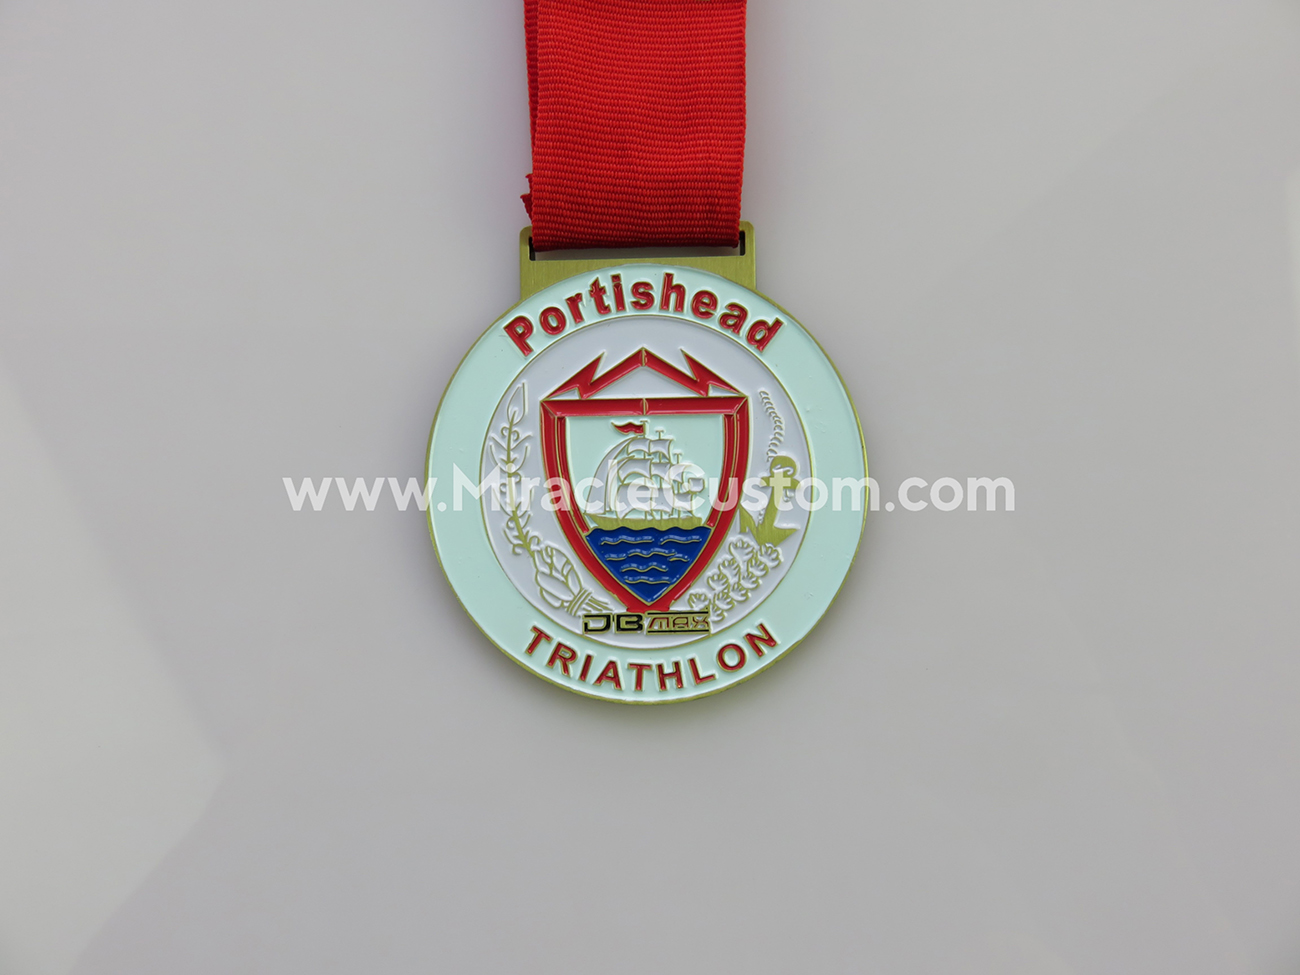 Custom Triathlon Medals China Factory Miracle Custom Medals